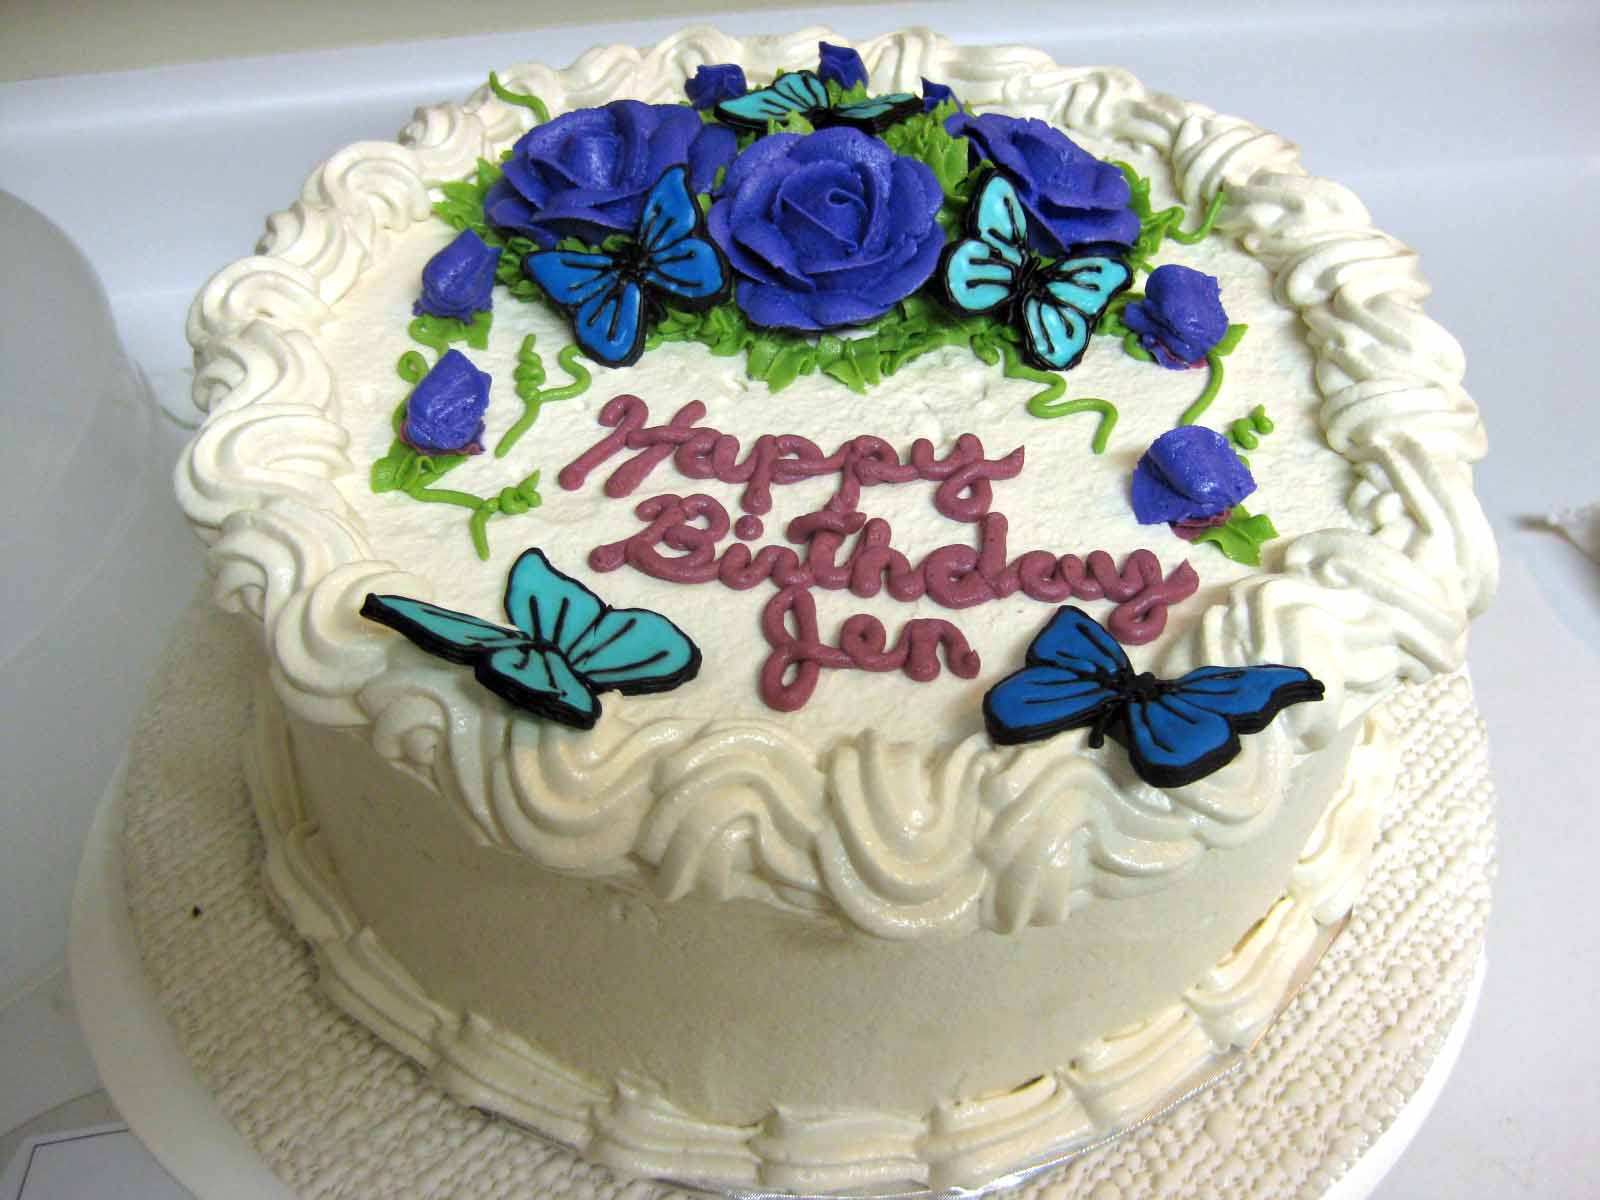 Image result for happy birthday jen cake